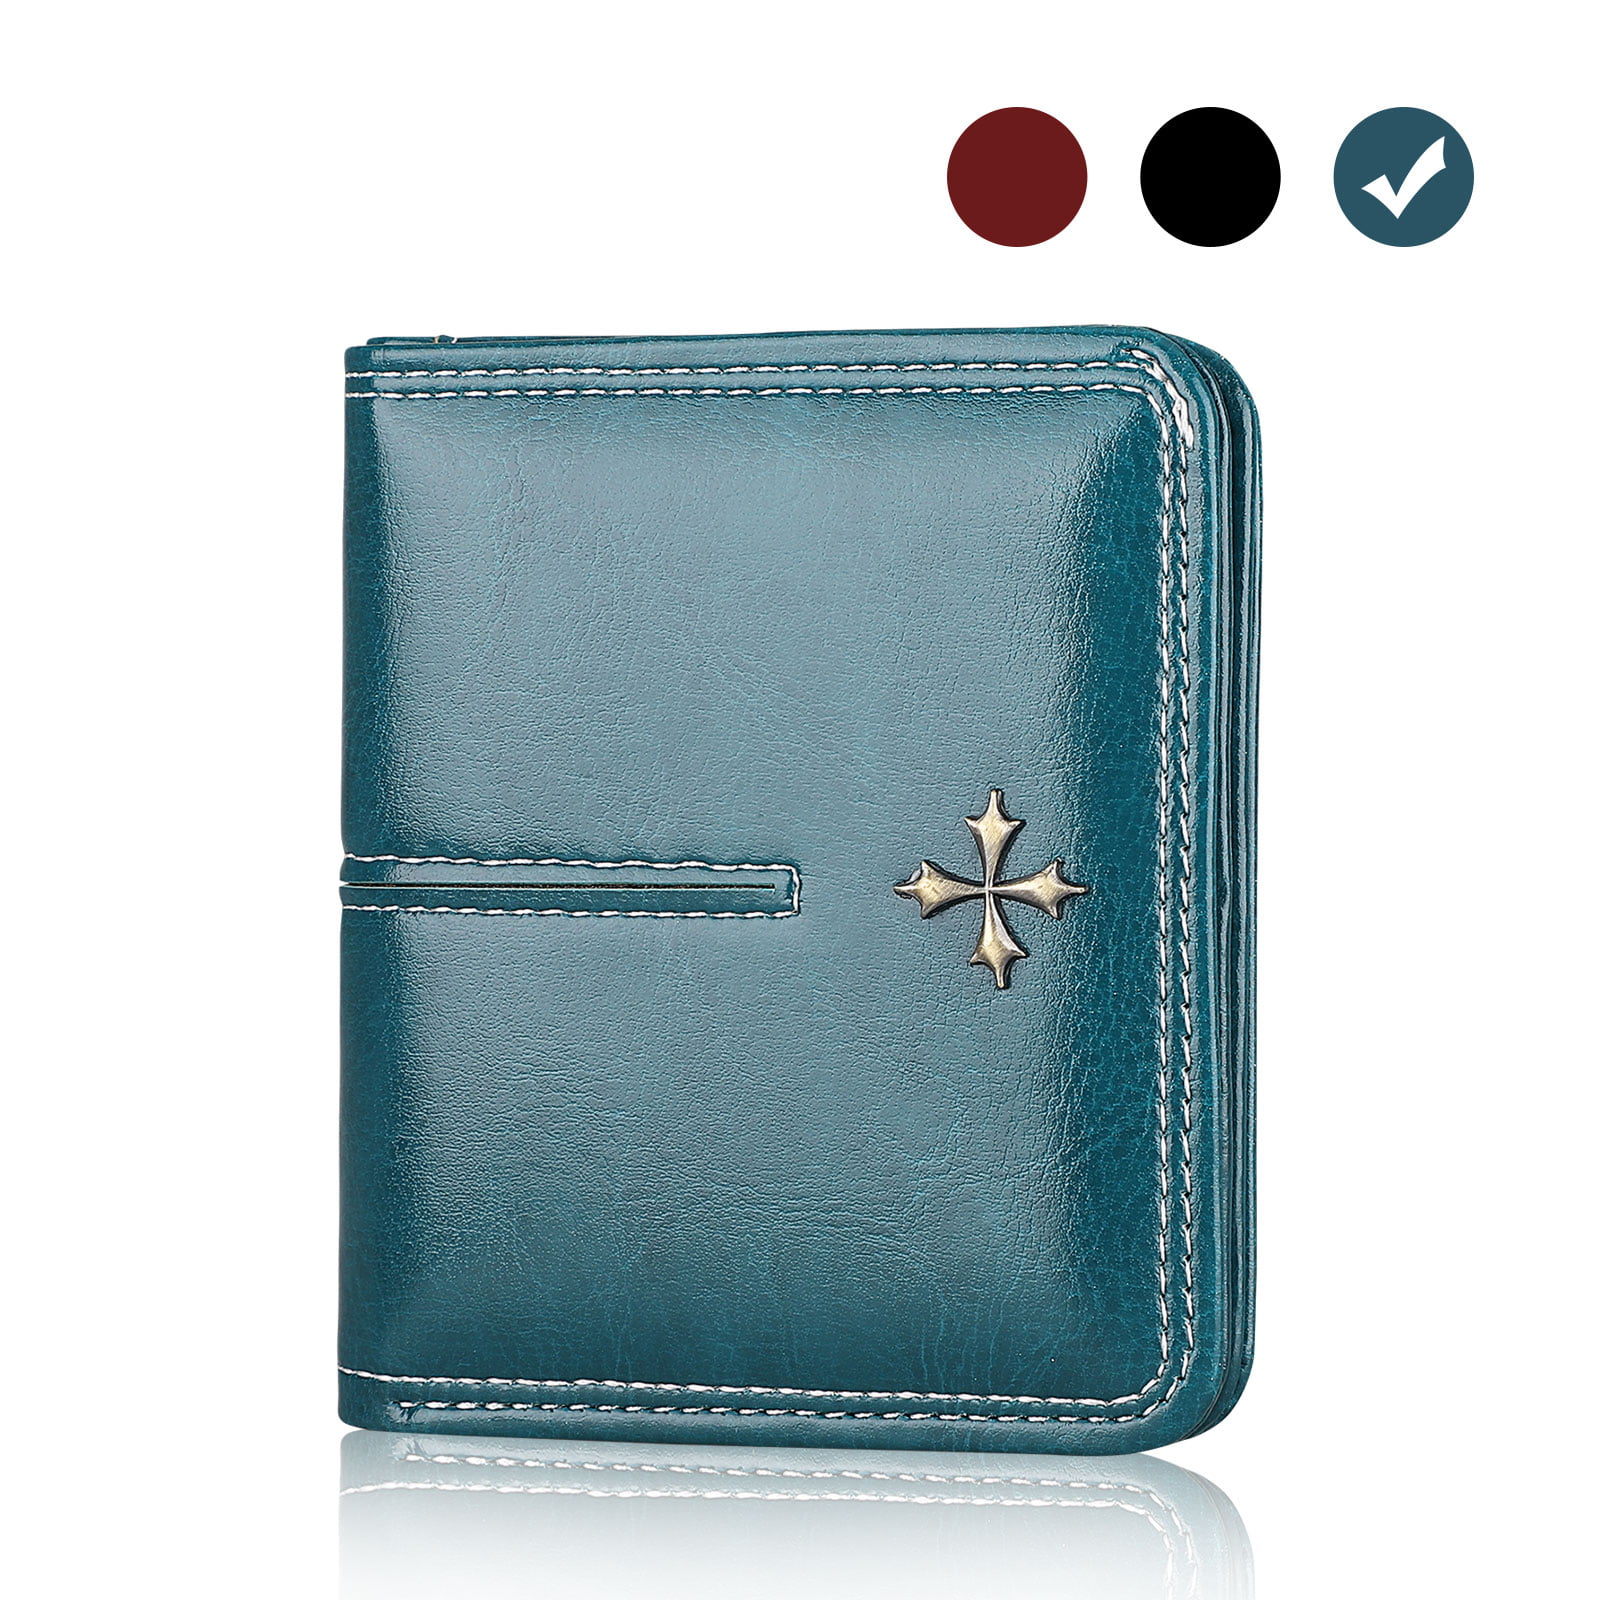 Cyanb Soft Leather Trifold Multi Card Holder Wallet Elegant Clutch Long Purse for Women Ladies 